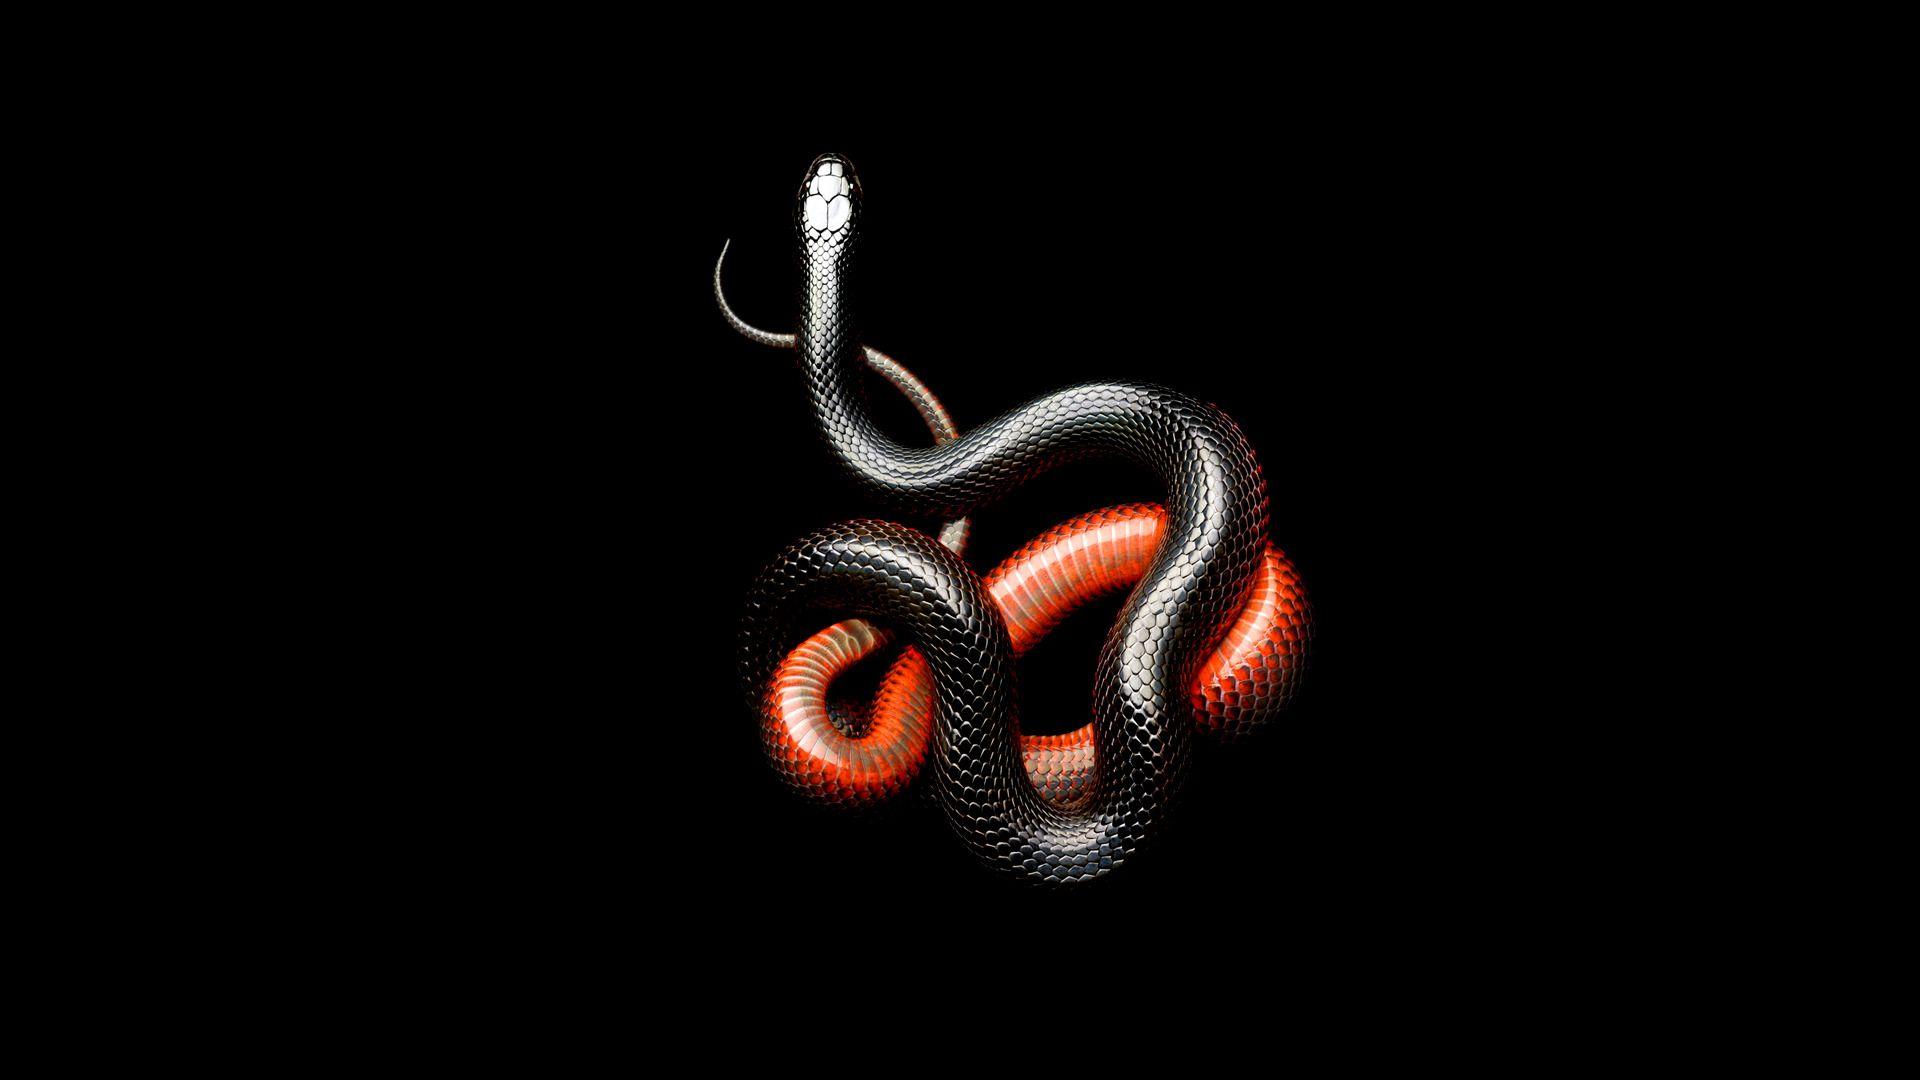 Black Snake wallpaper by XavierTripleX  Download on ZEDGE  f784